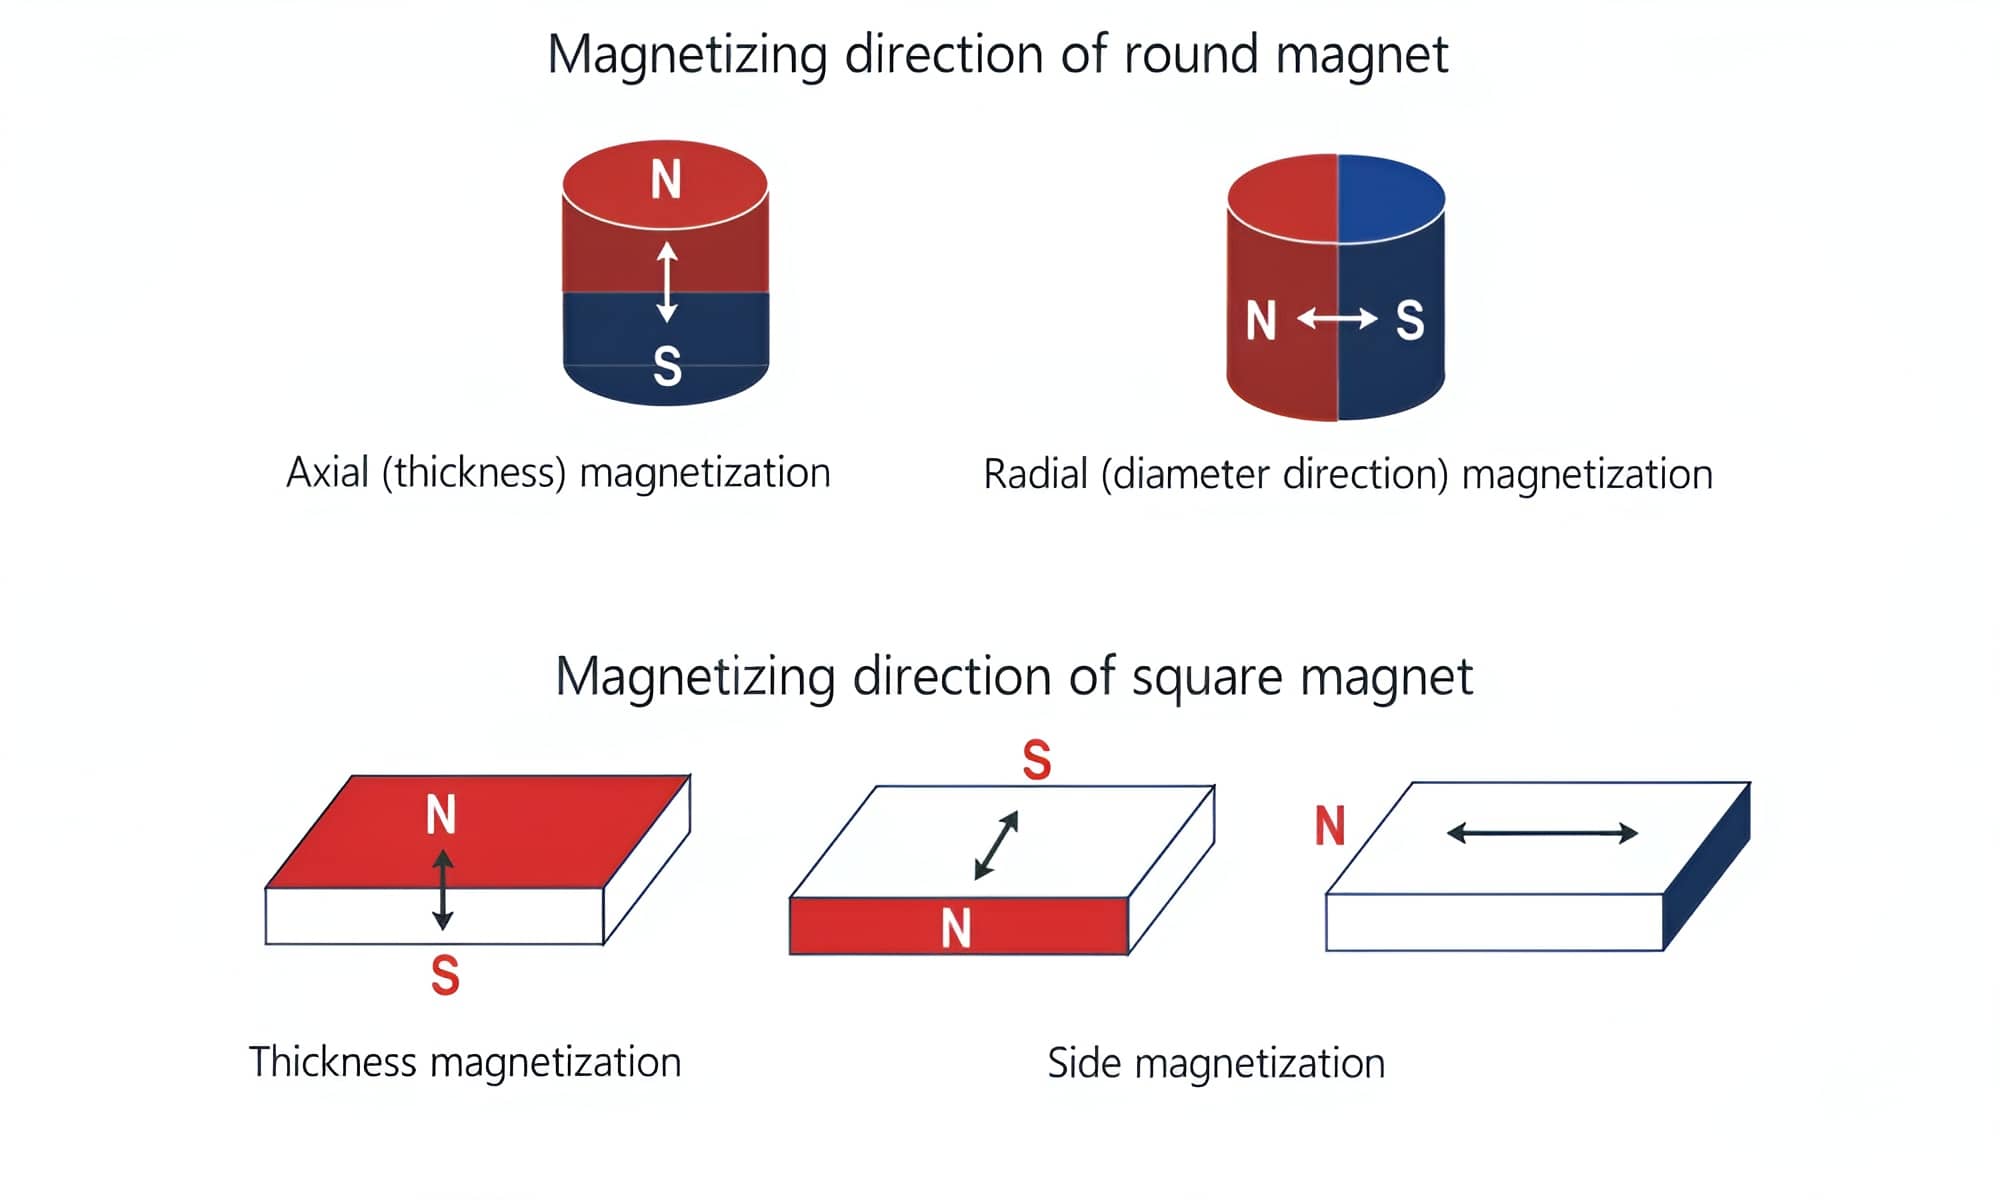 neodymium ring magnet with high-tech advantage